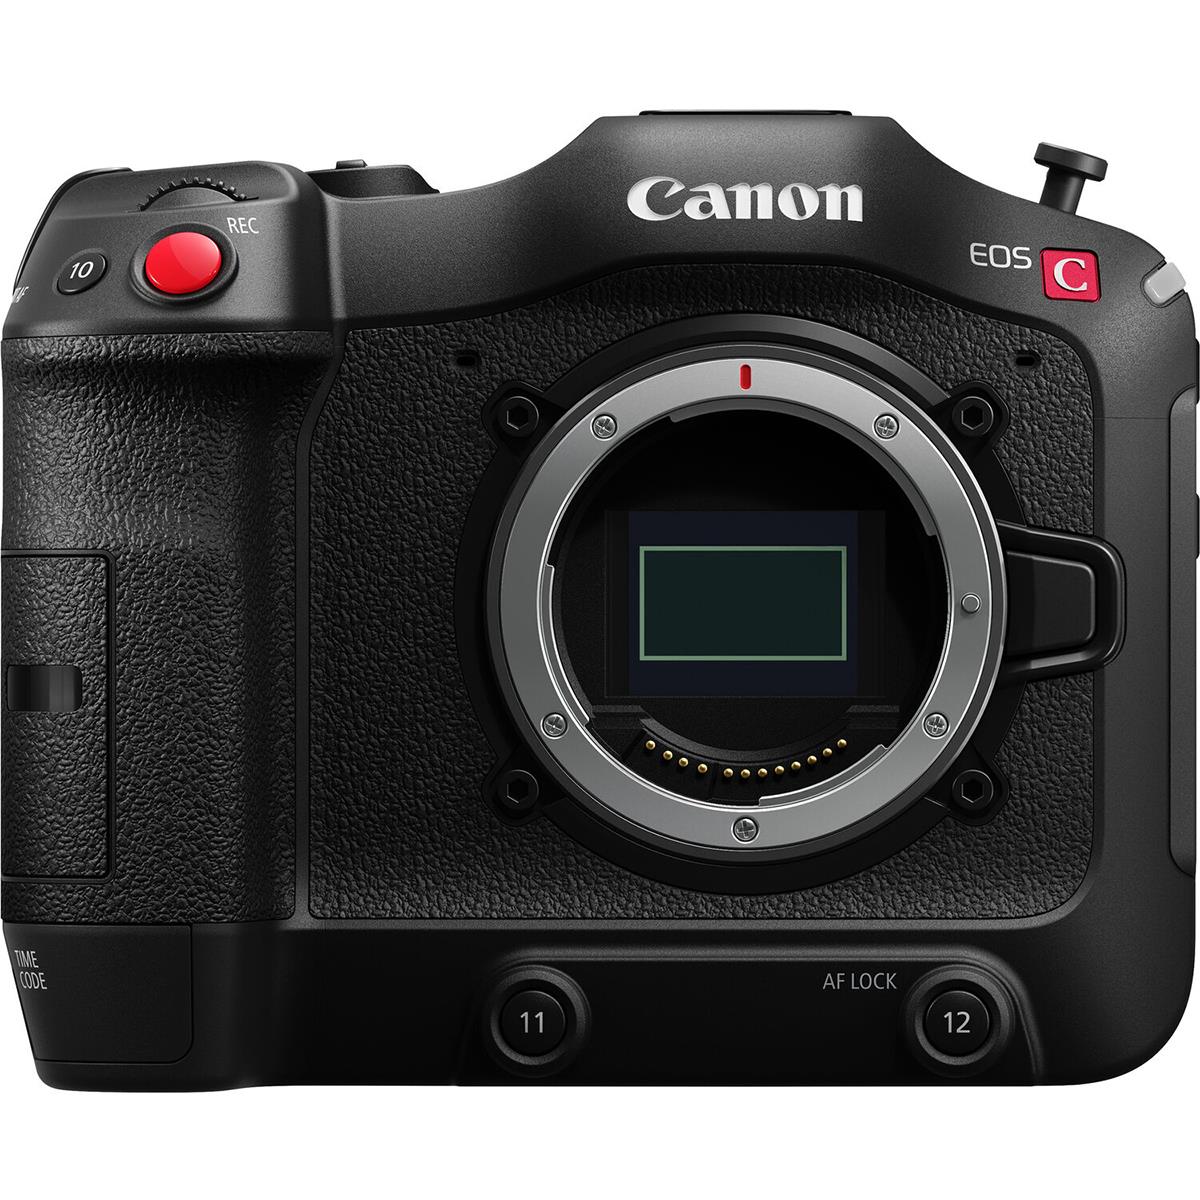 Image of Canon EOS C70 Digital Camera Body